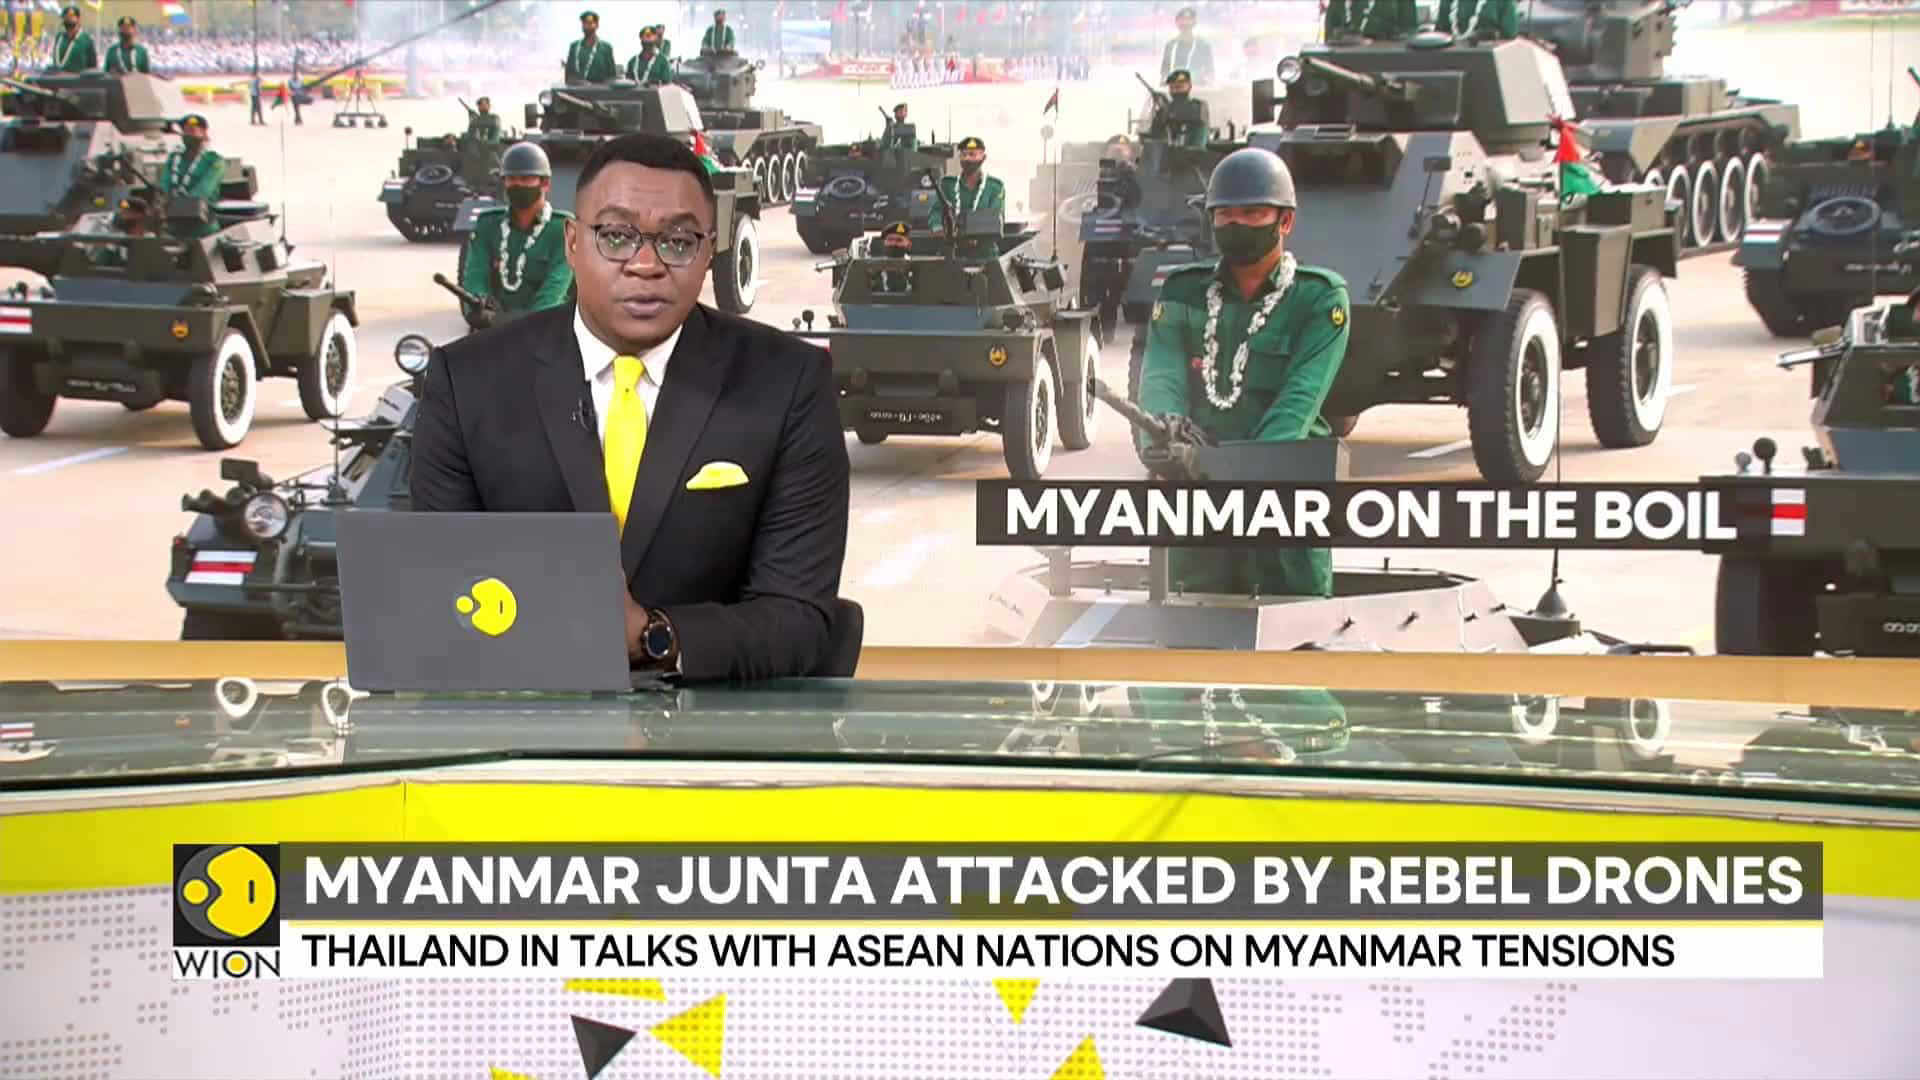 Myanmar junta attacked by rebel drones